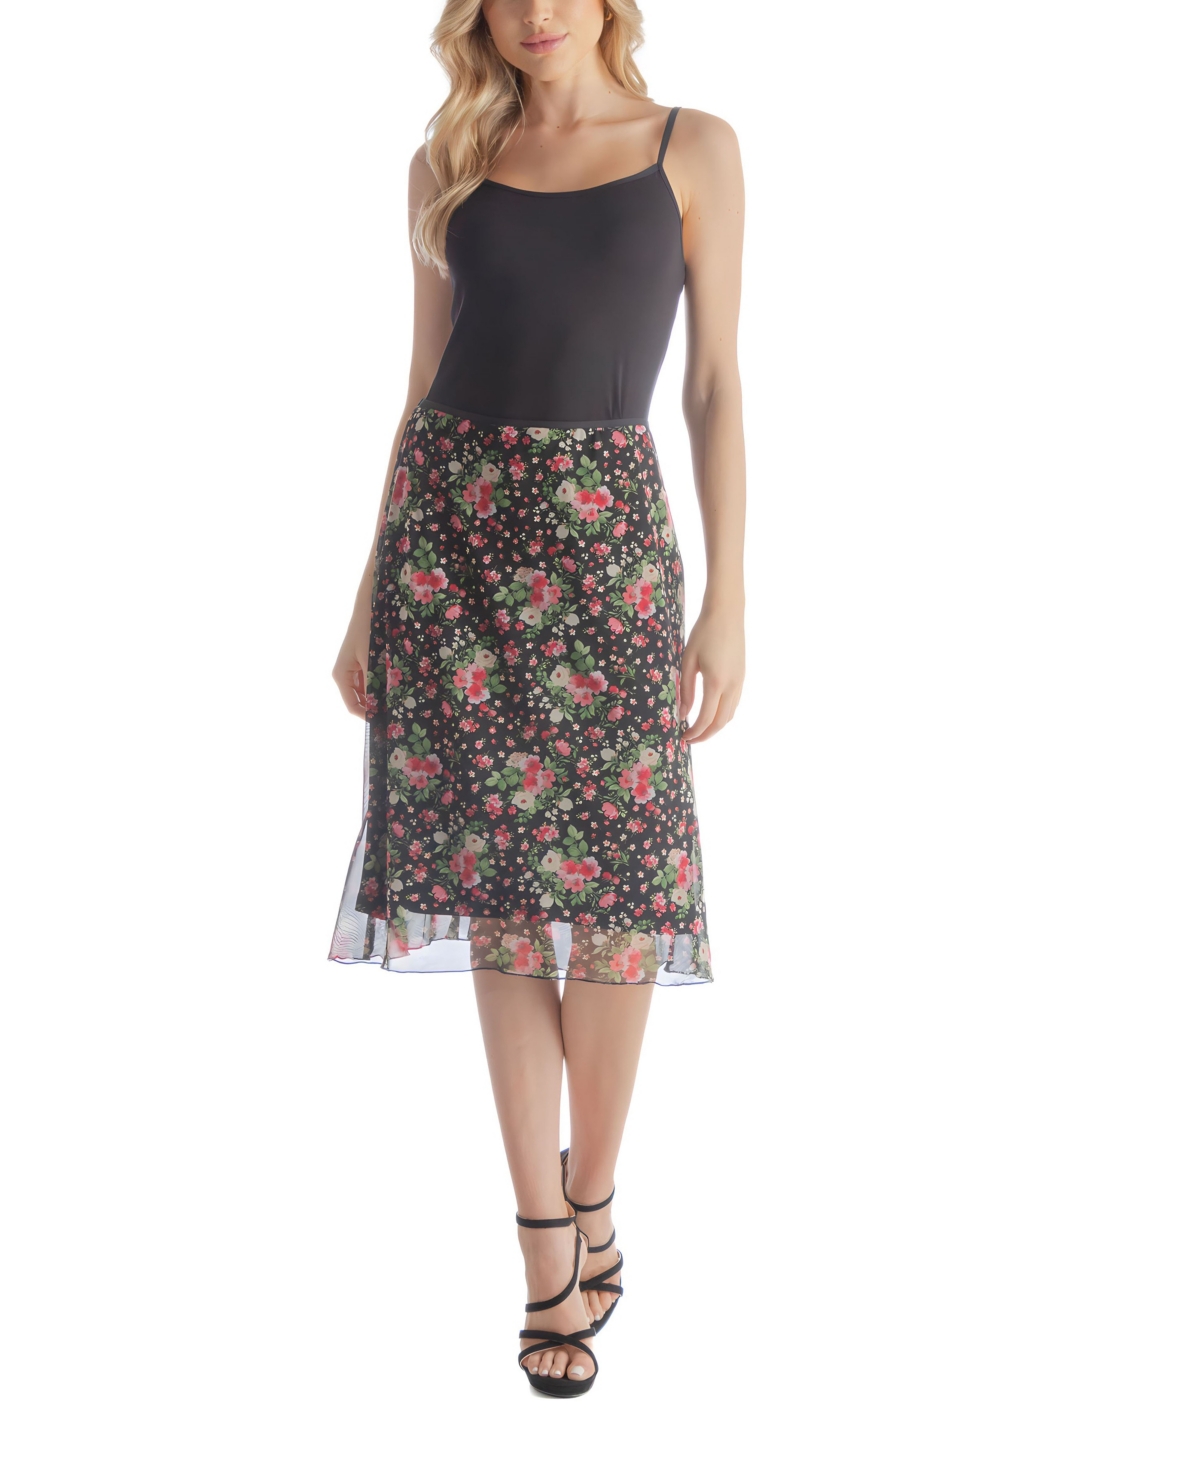 24seven Comfort Apparel Plus Size Colorful Elastic Waist Skirt In Black Multi